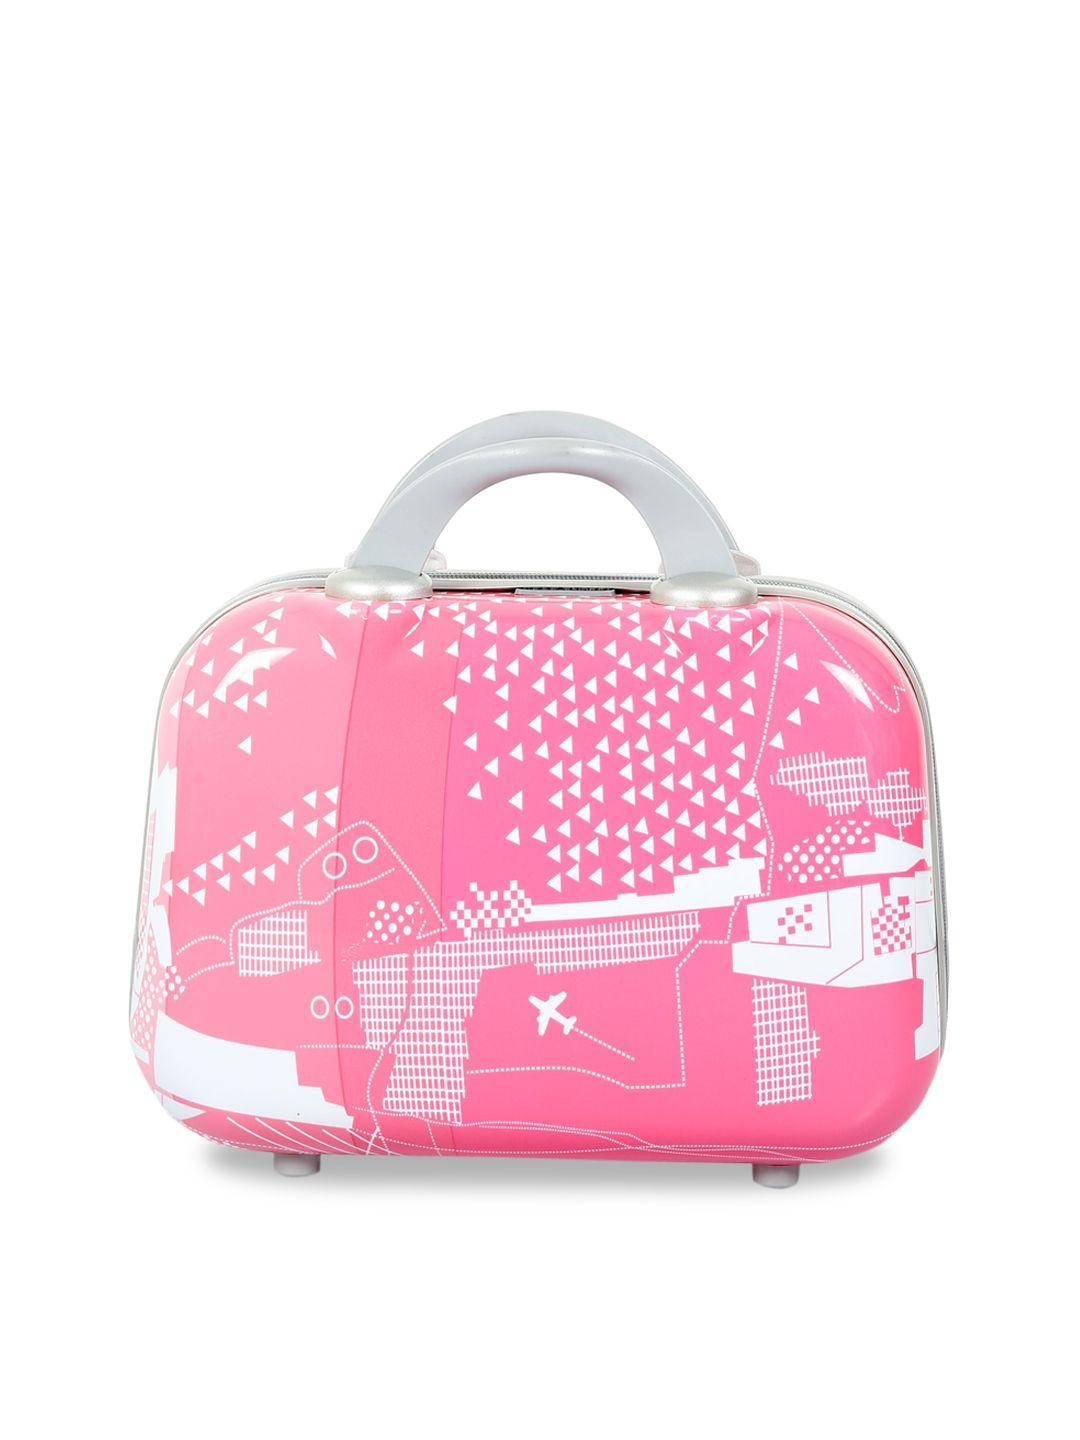 polo class unisex pink vanity bag